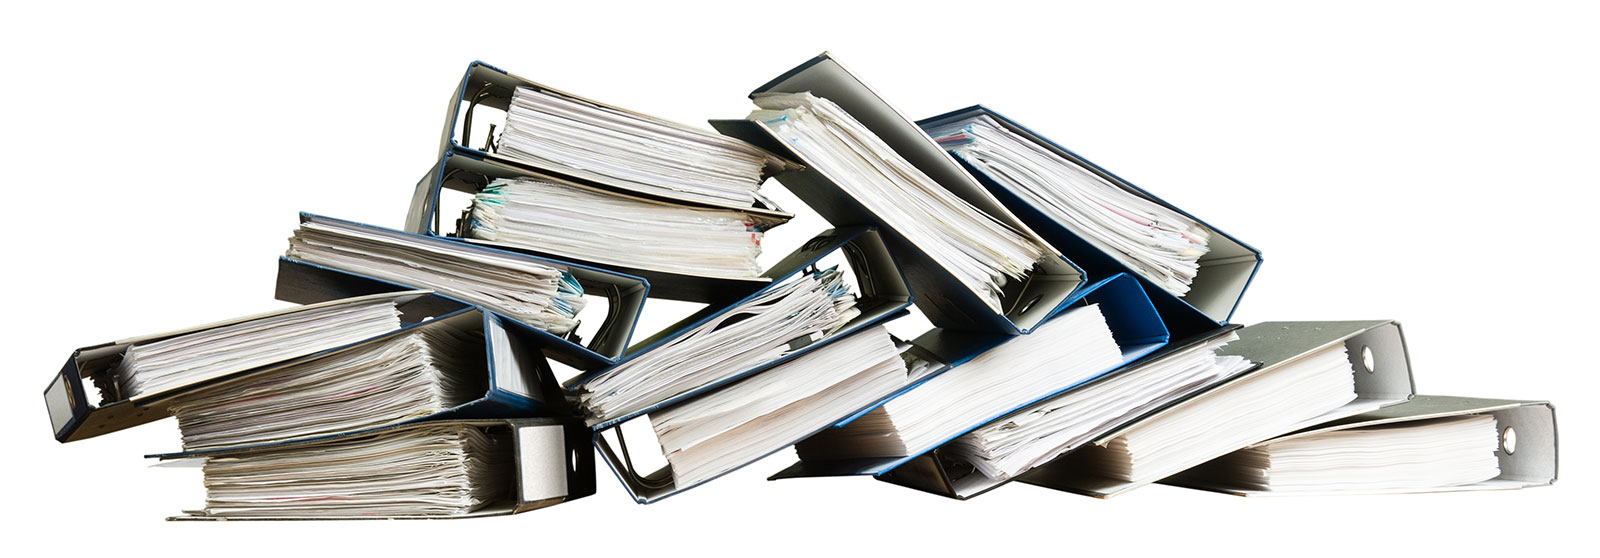 a pile of folders